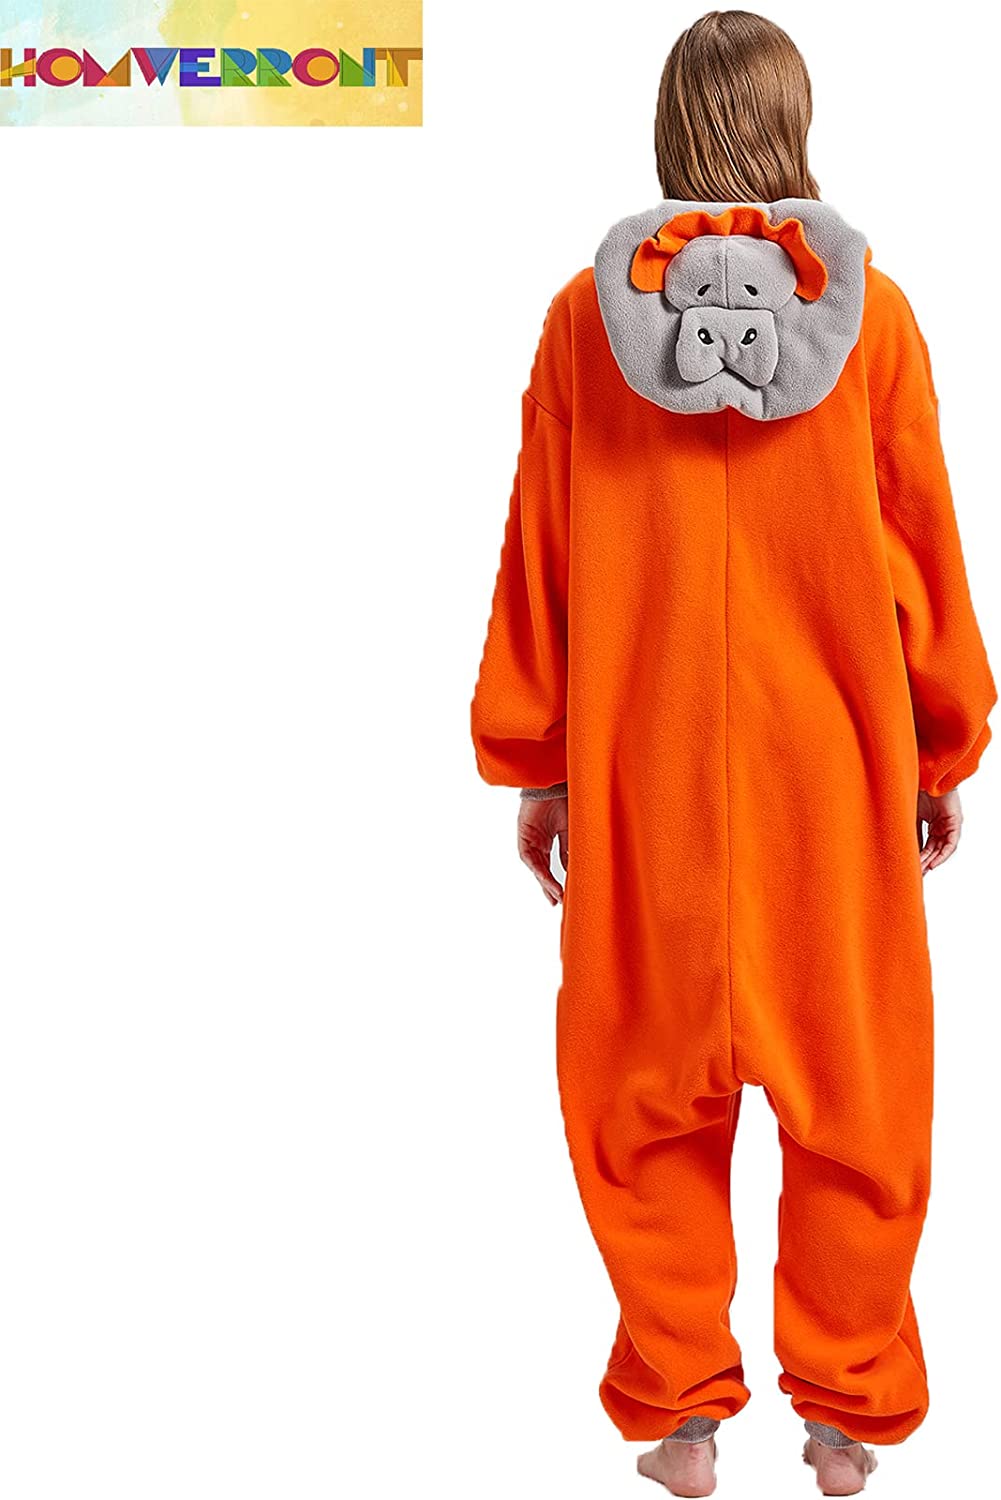 Orangutan Onesie Pajamas Animal Cosplay Costume for adults